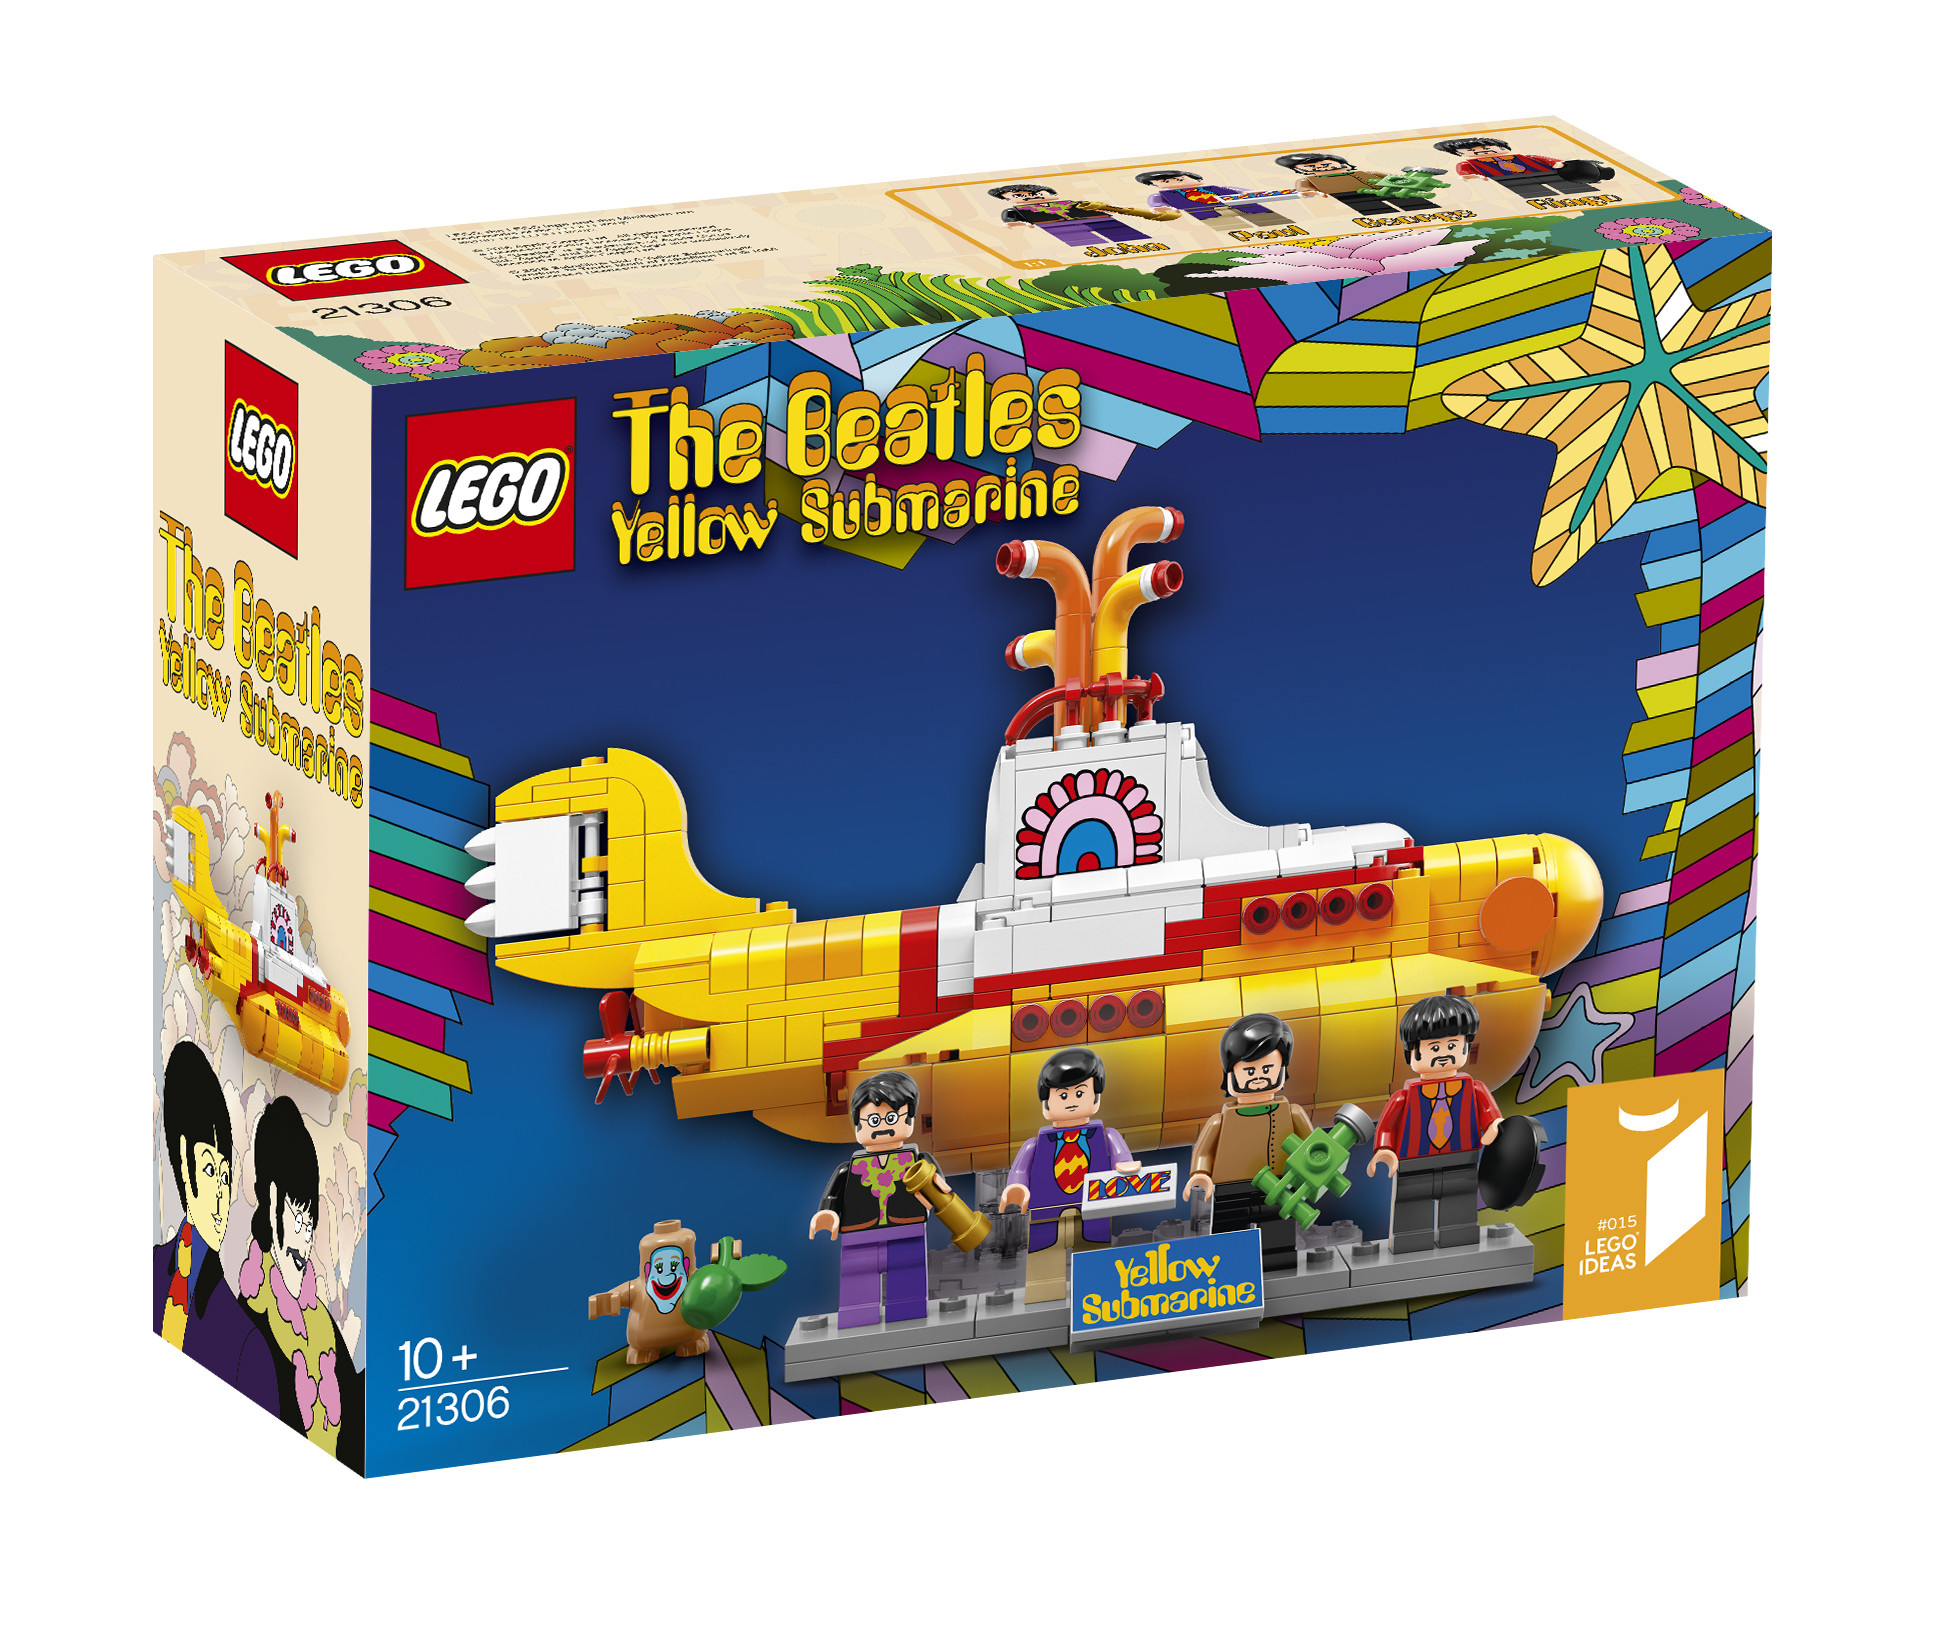 1956x1638 Yellow Submarine - Lego launches The Beatles Yellow Submarine set